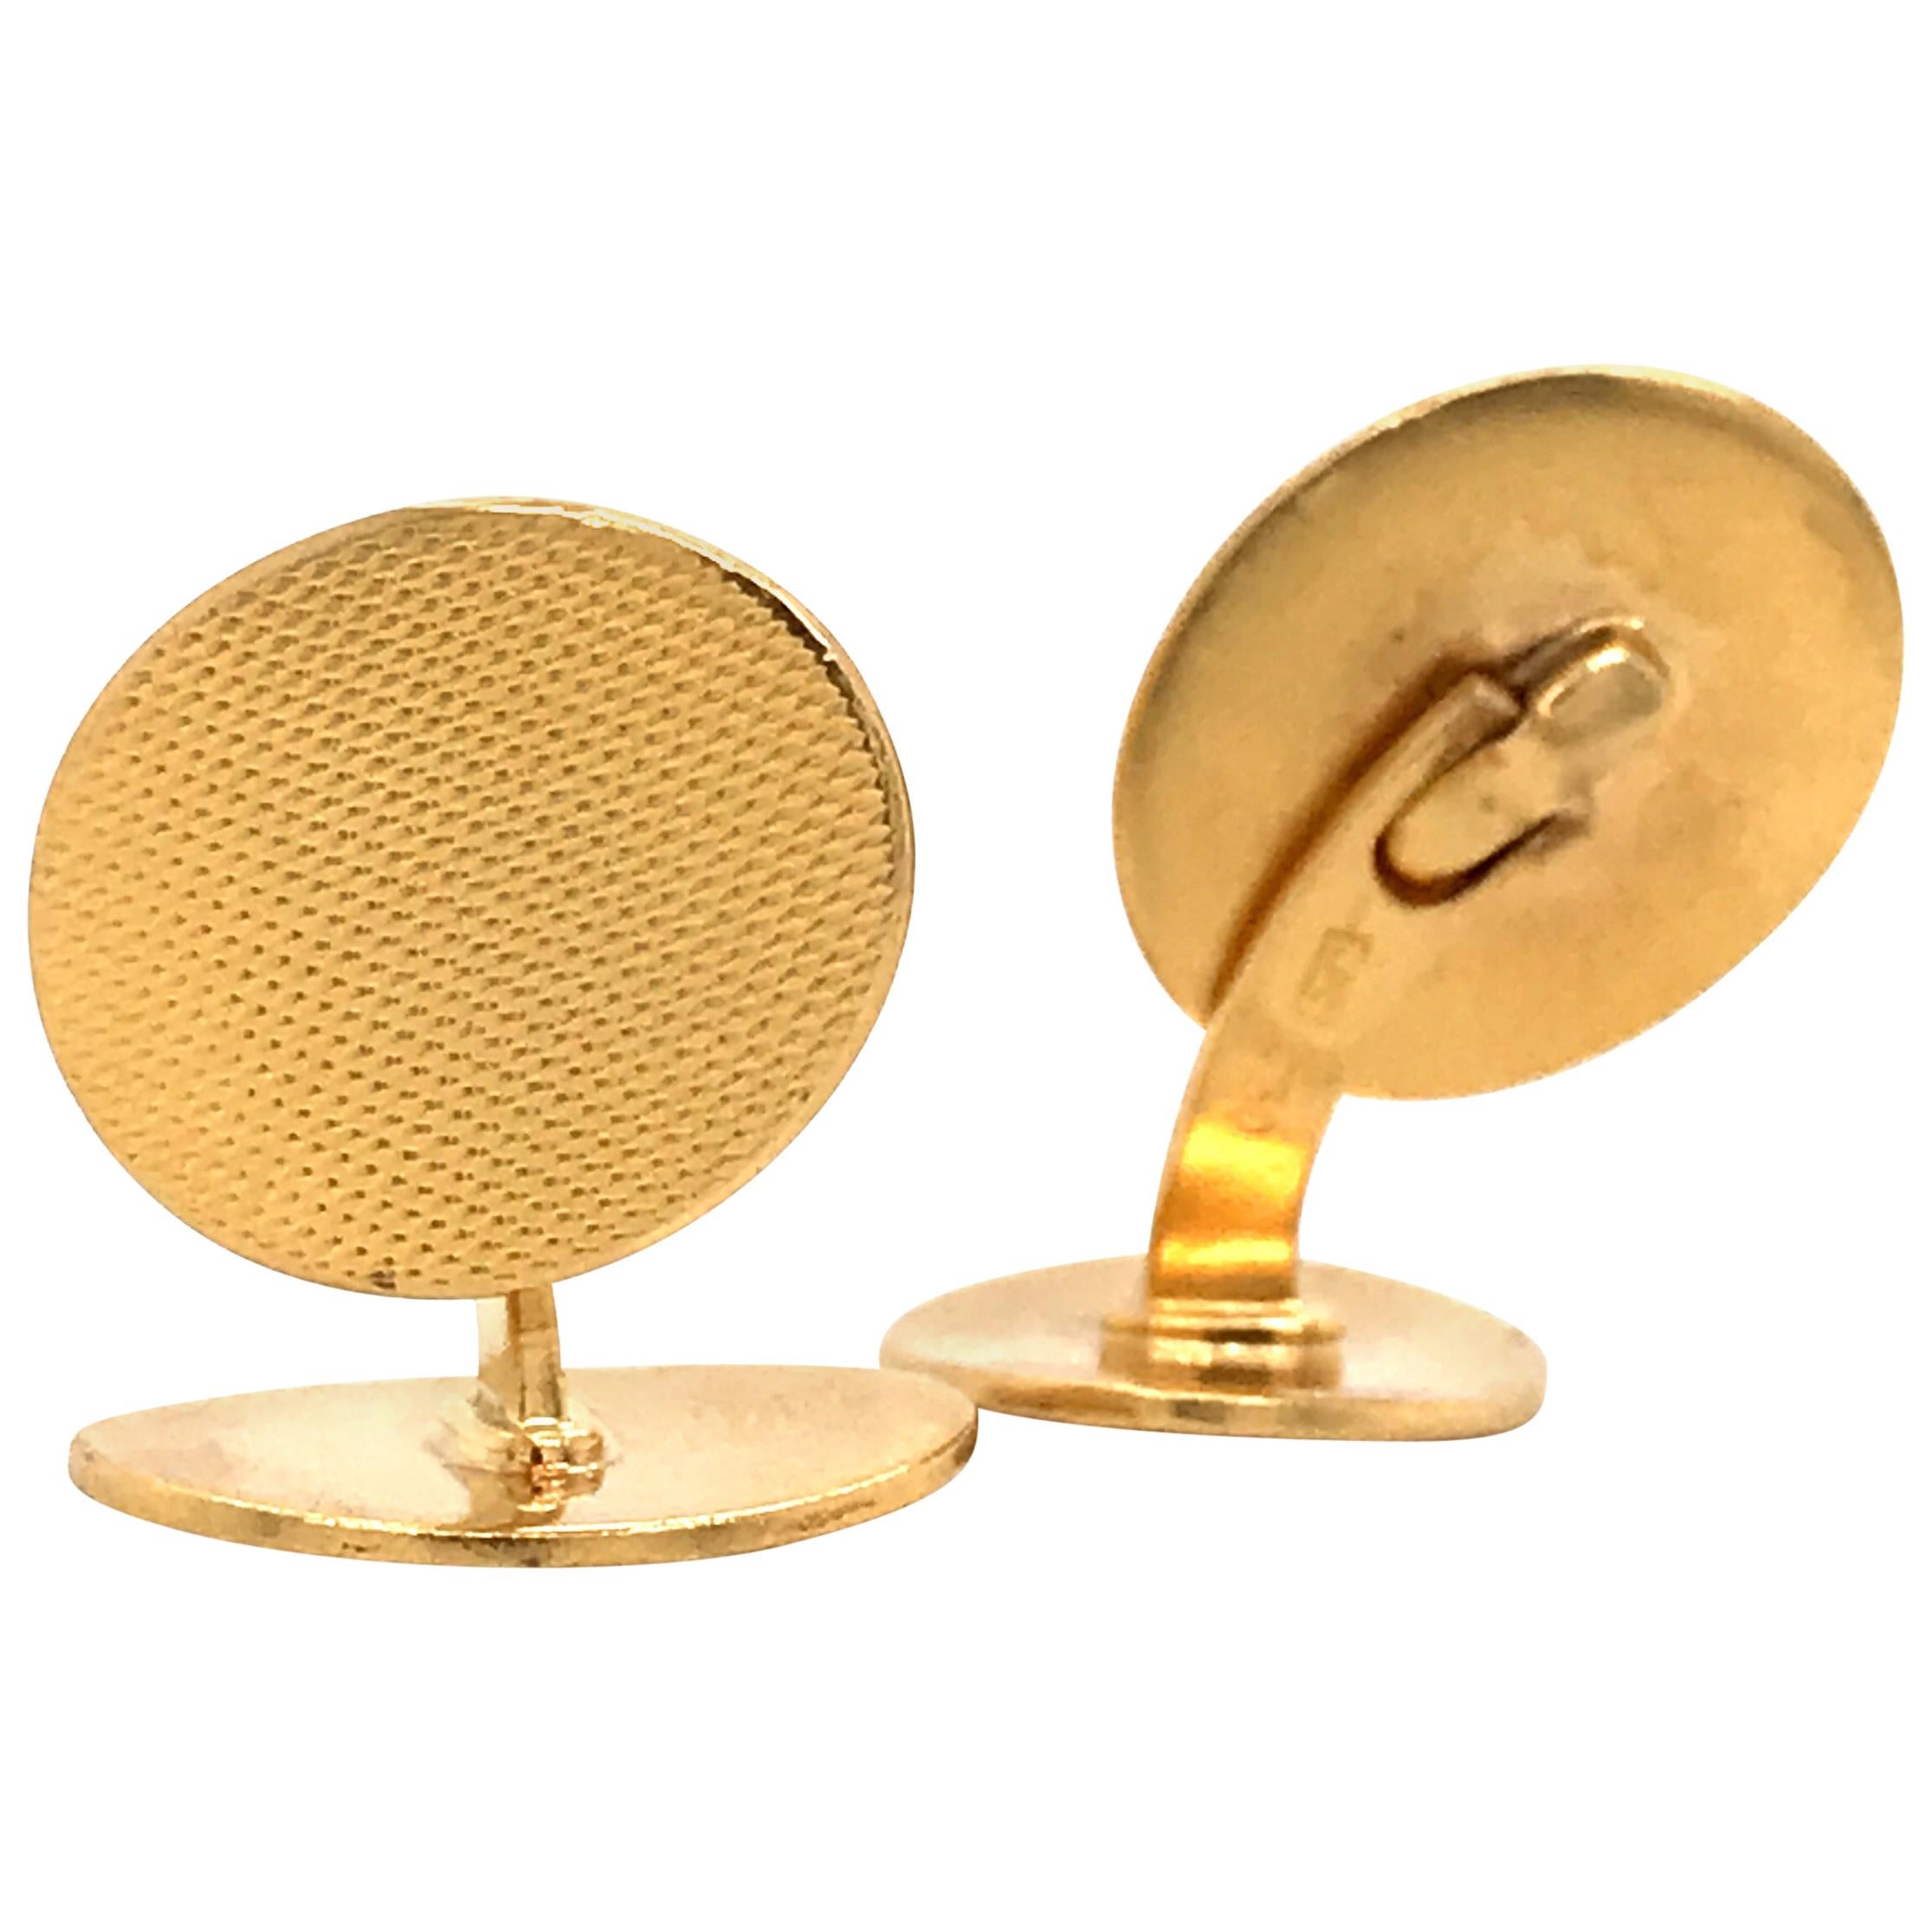 Yellow Gold 18 K Cufflinks
Style Retro
1.8 cm / 0.4 inch
Widht / 1.7 cm / 0.4 inch 